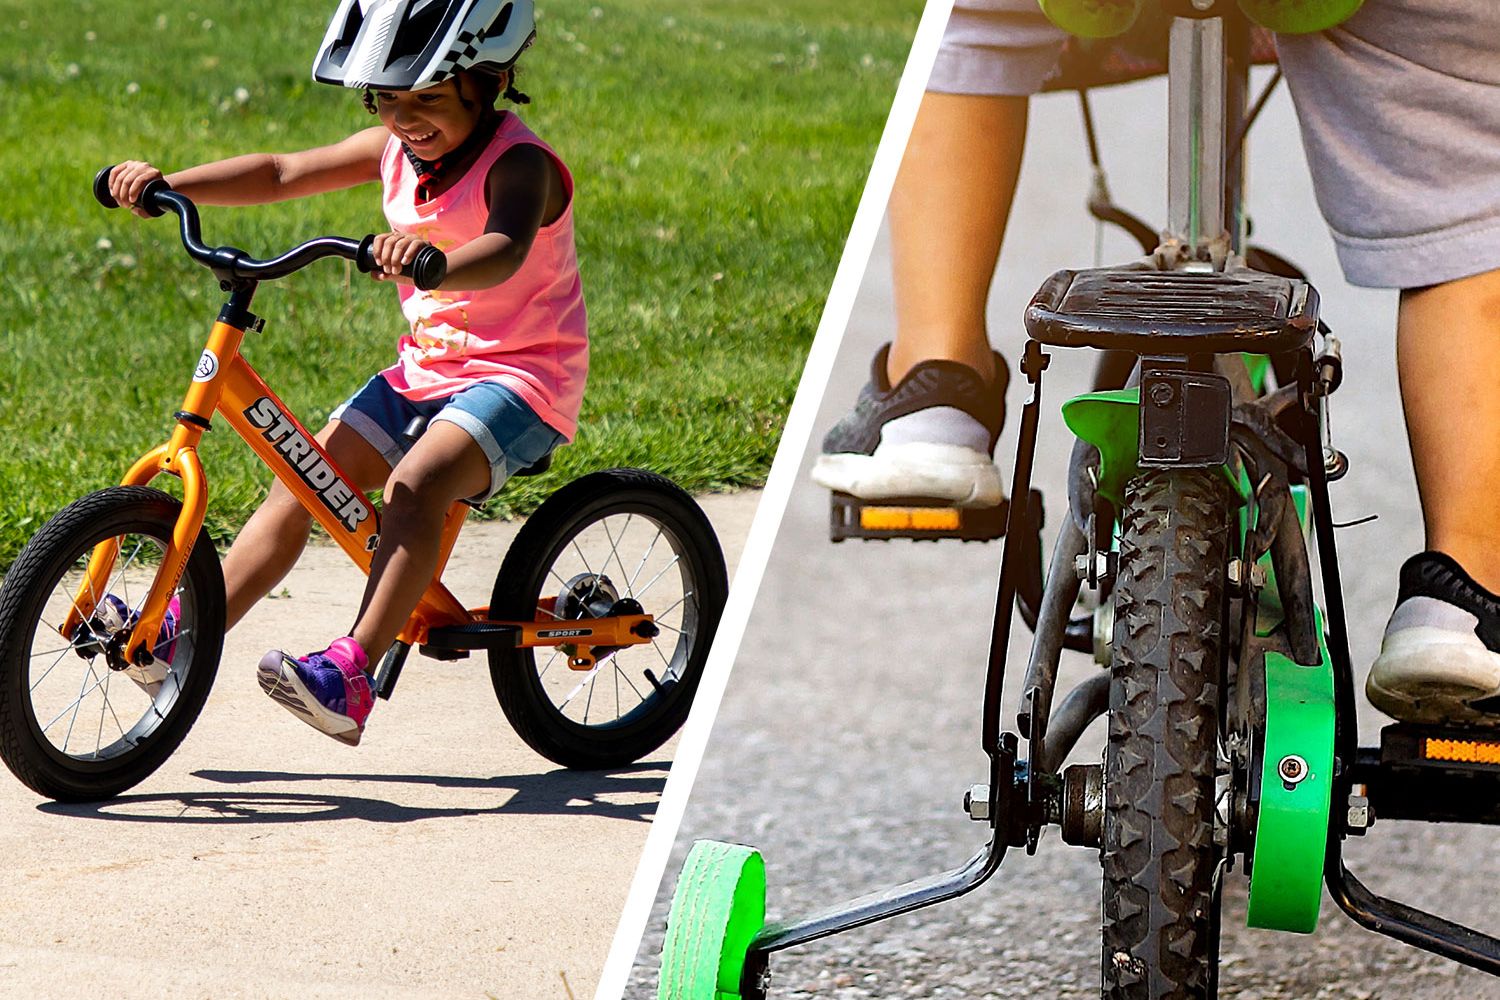 Child gliding on Strider 14x Sport vs child on training wheel bike